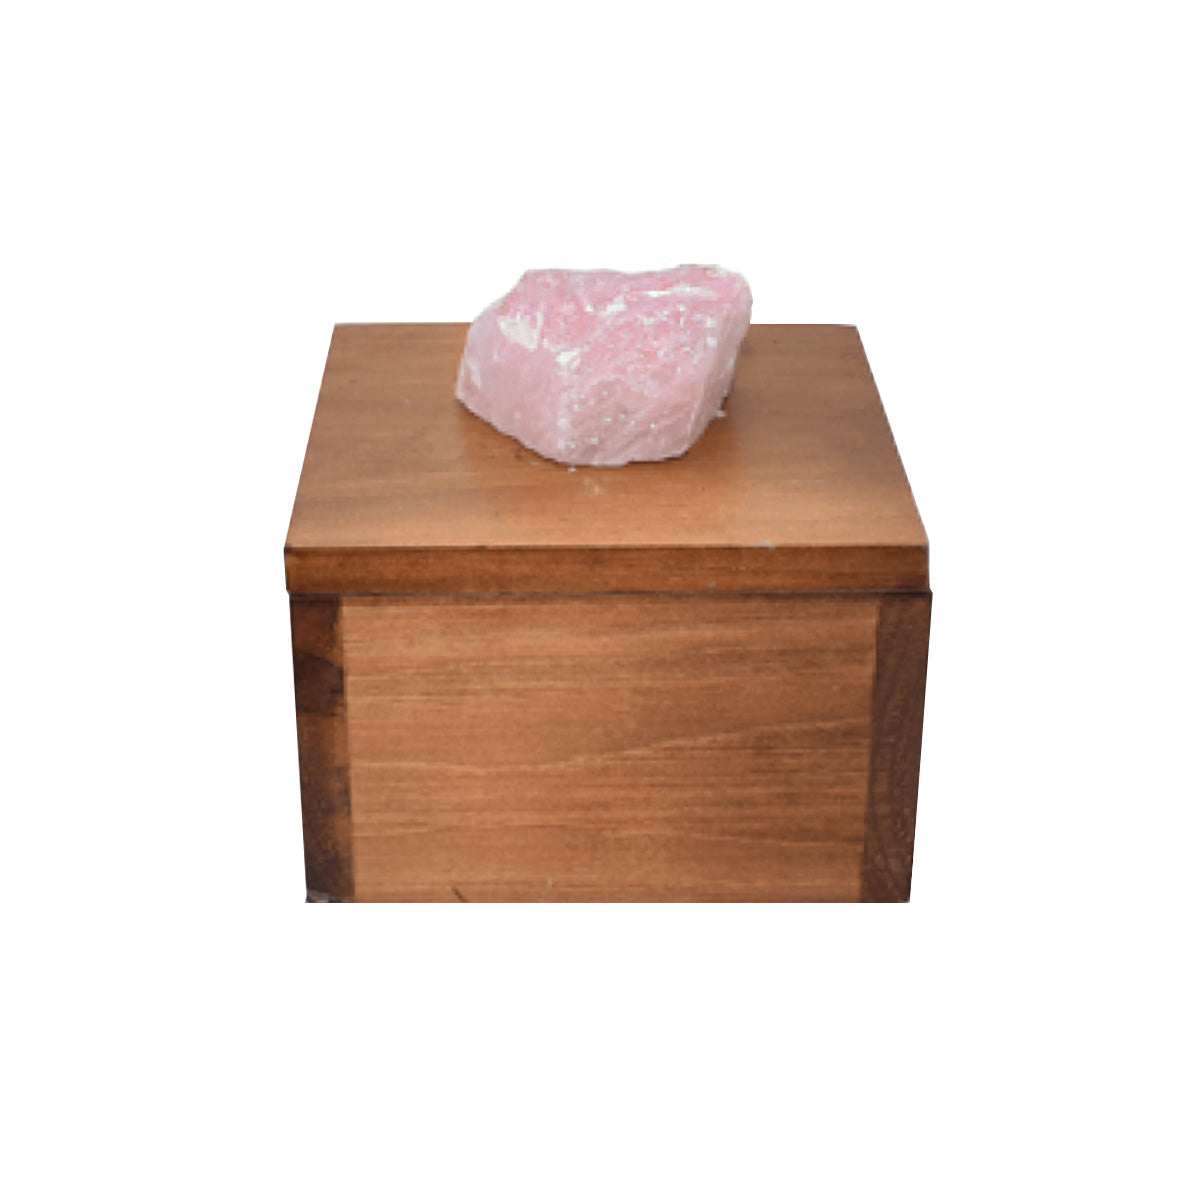 Natural Wood Jewelry Box with Rose Quartz Chunk